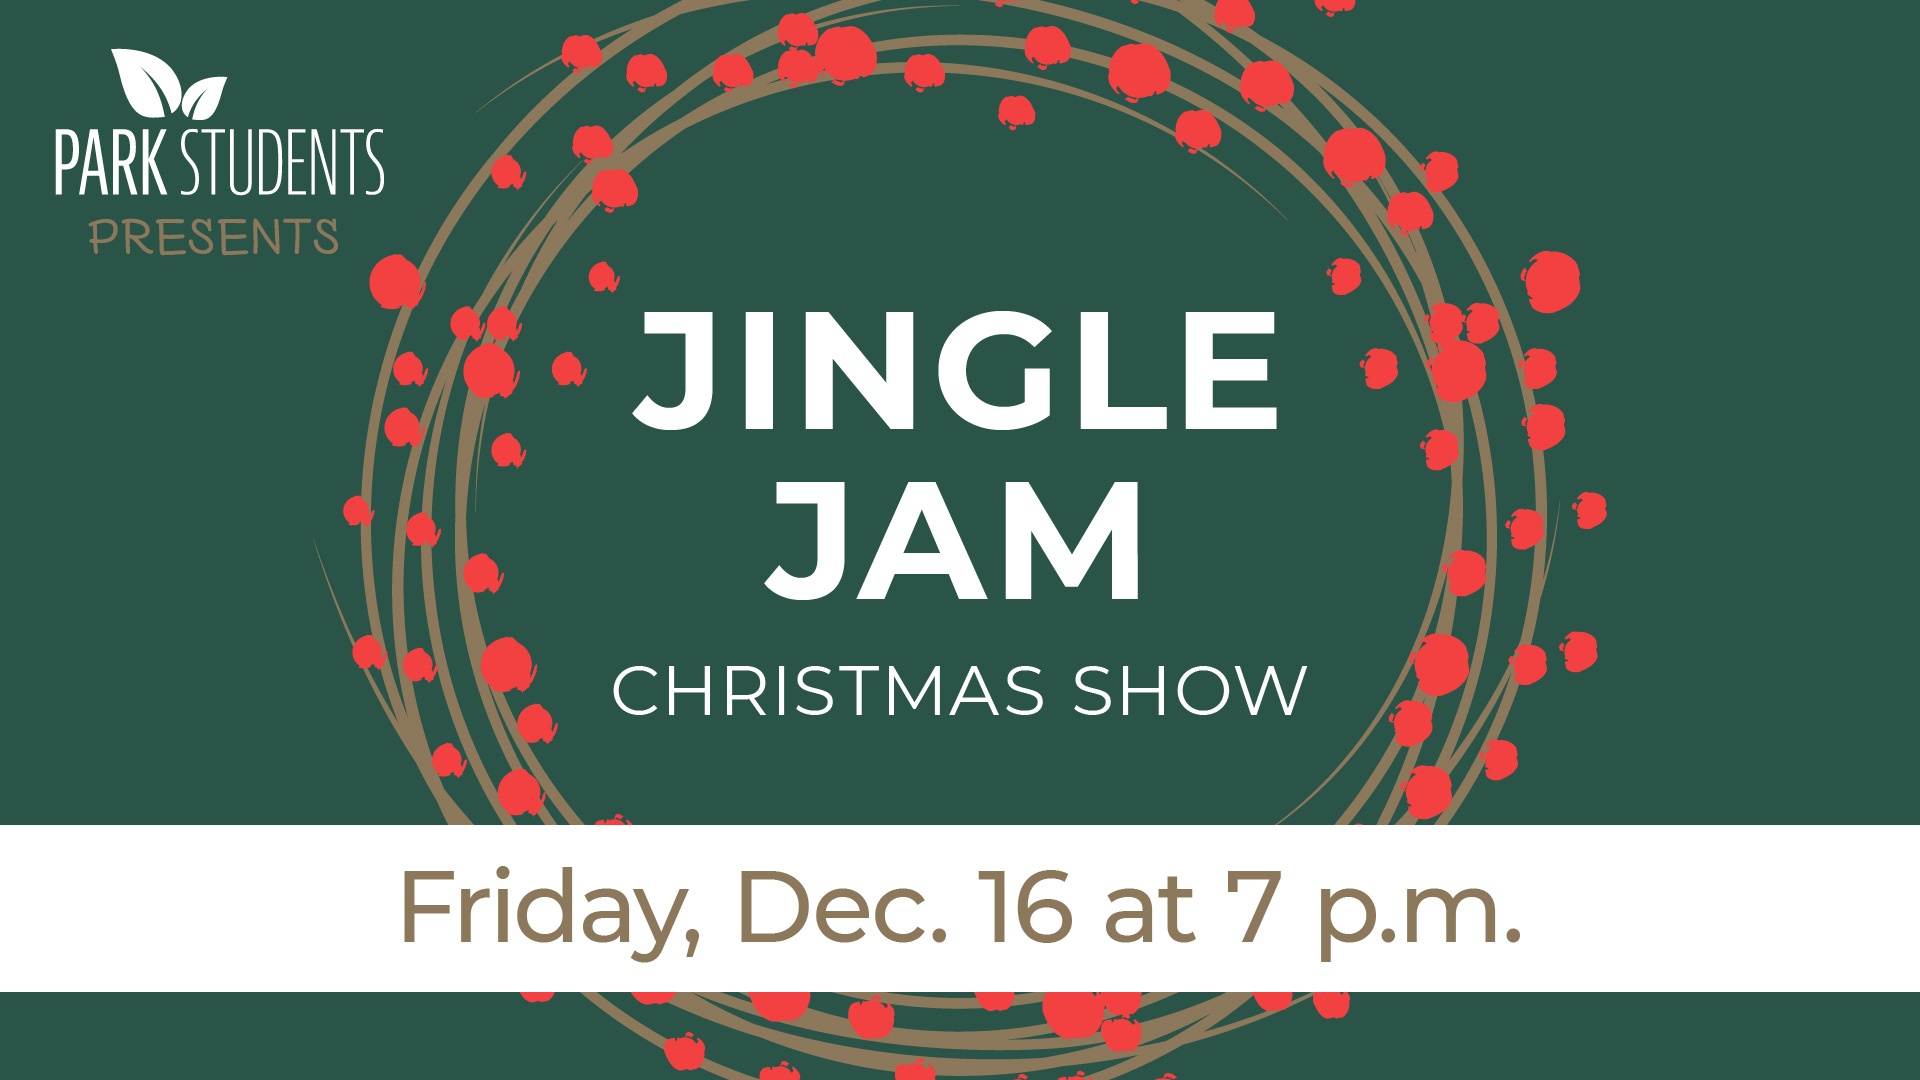 Jingle Jam Dec. 16 at 7